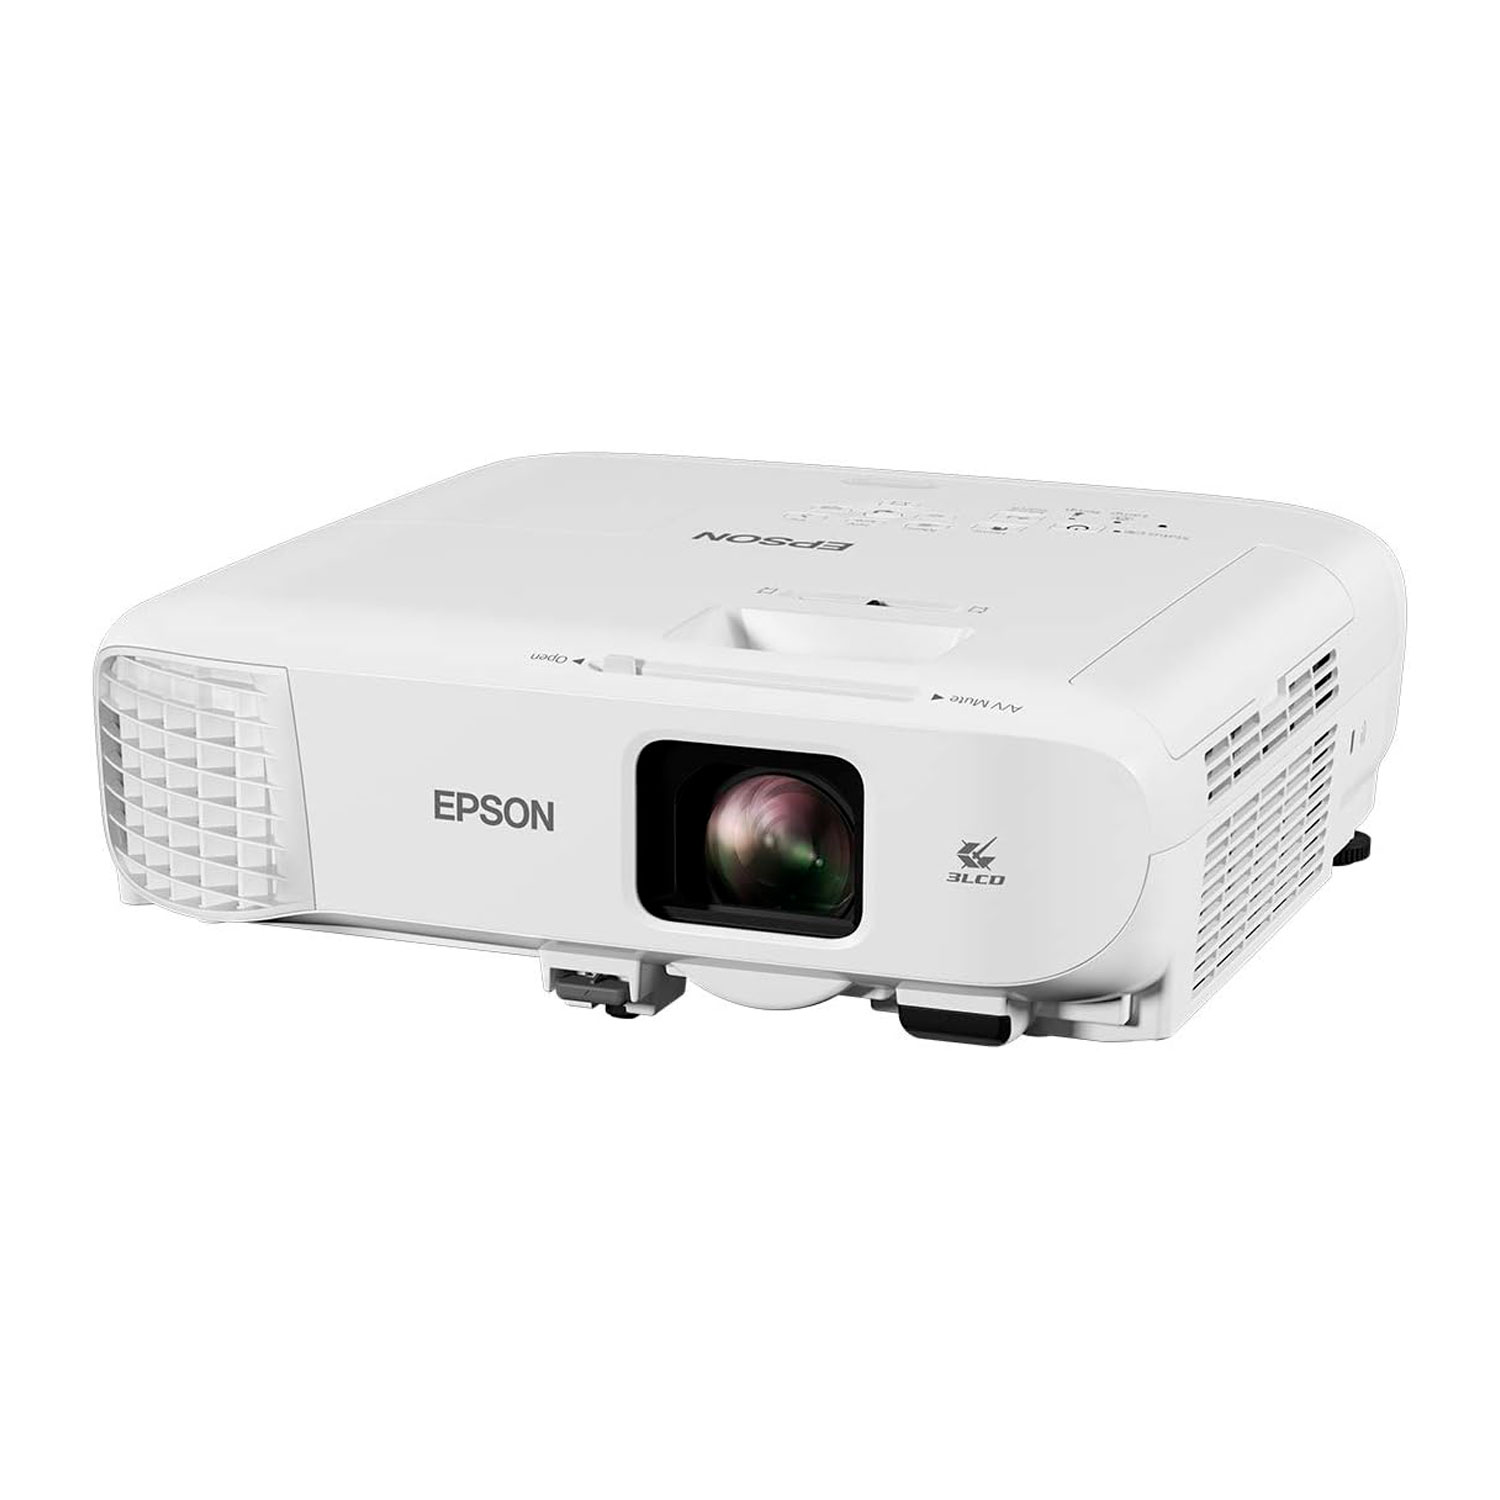 Projetor Epson X49 HDMI / VGA / USB - 3600 Lumens - Branco